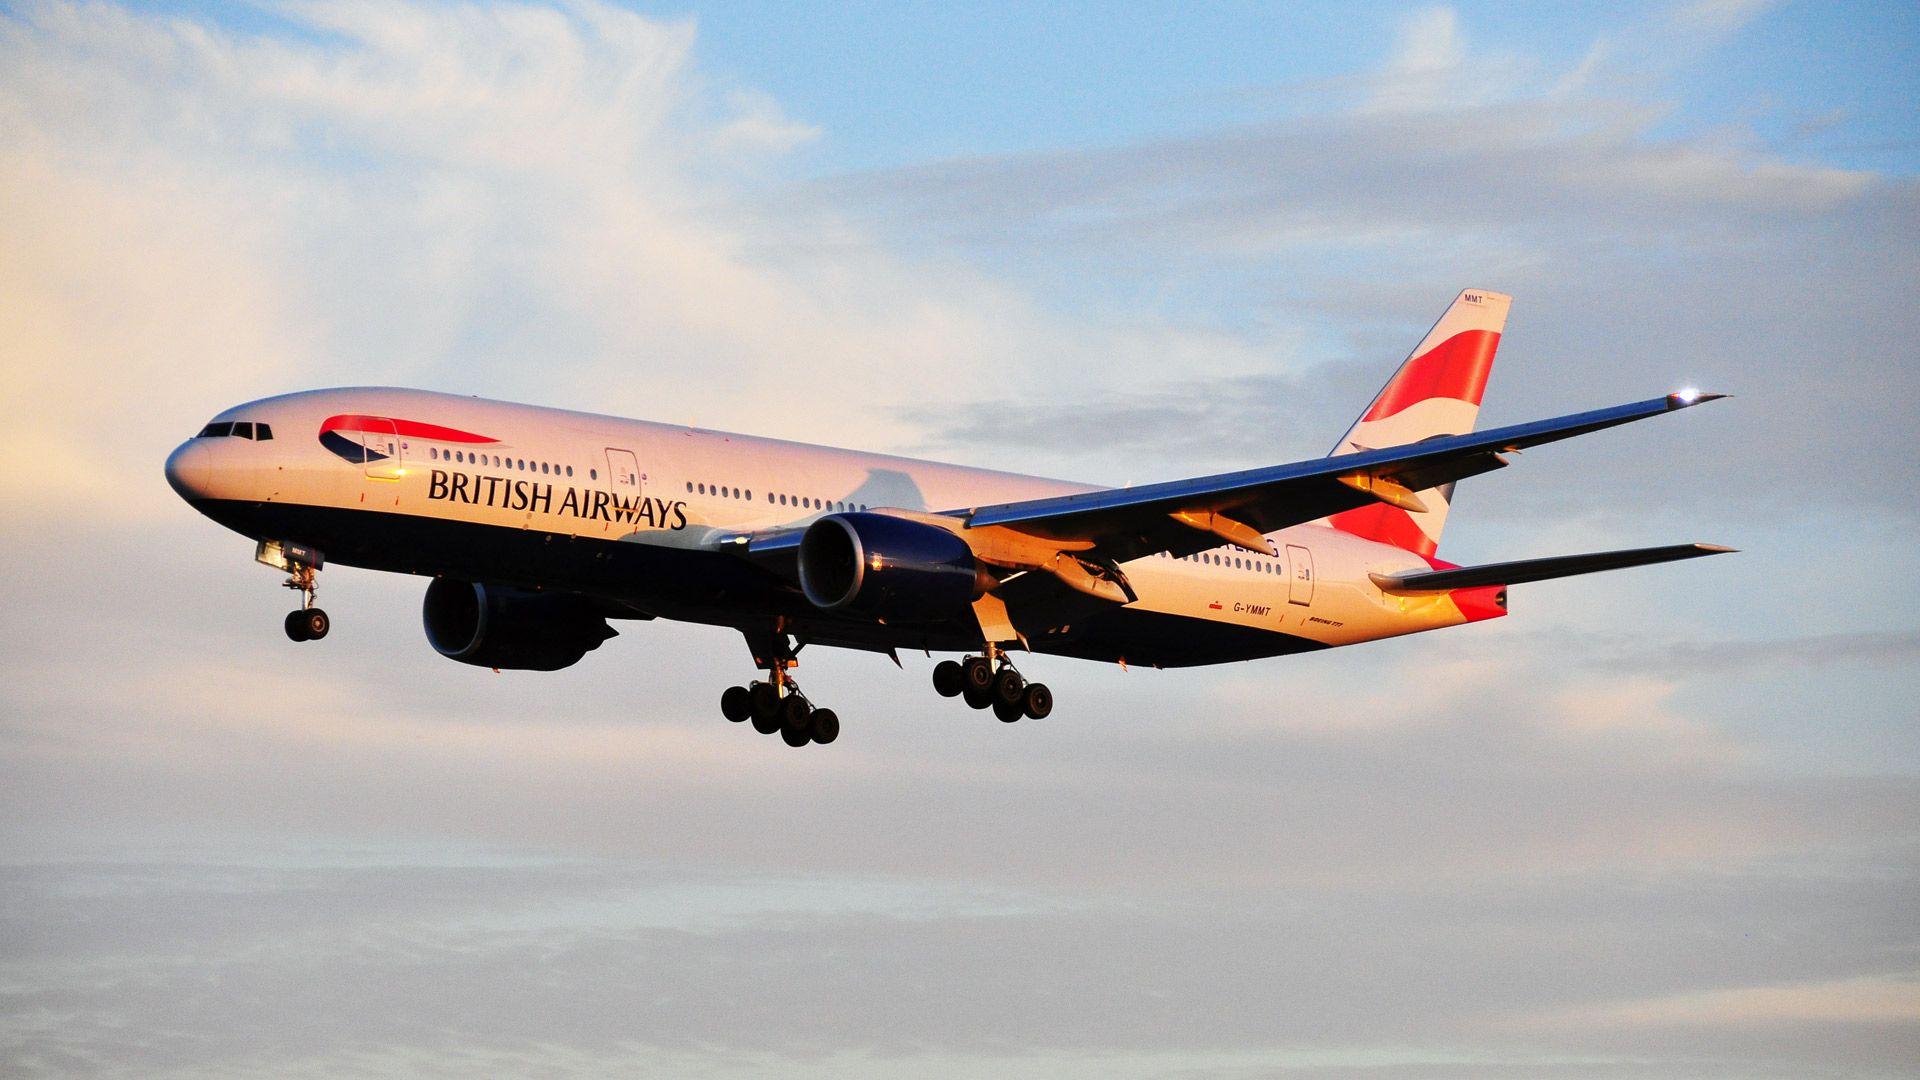 Boeing 777 of British Airways is flying at sunrise wallpaper